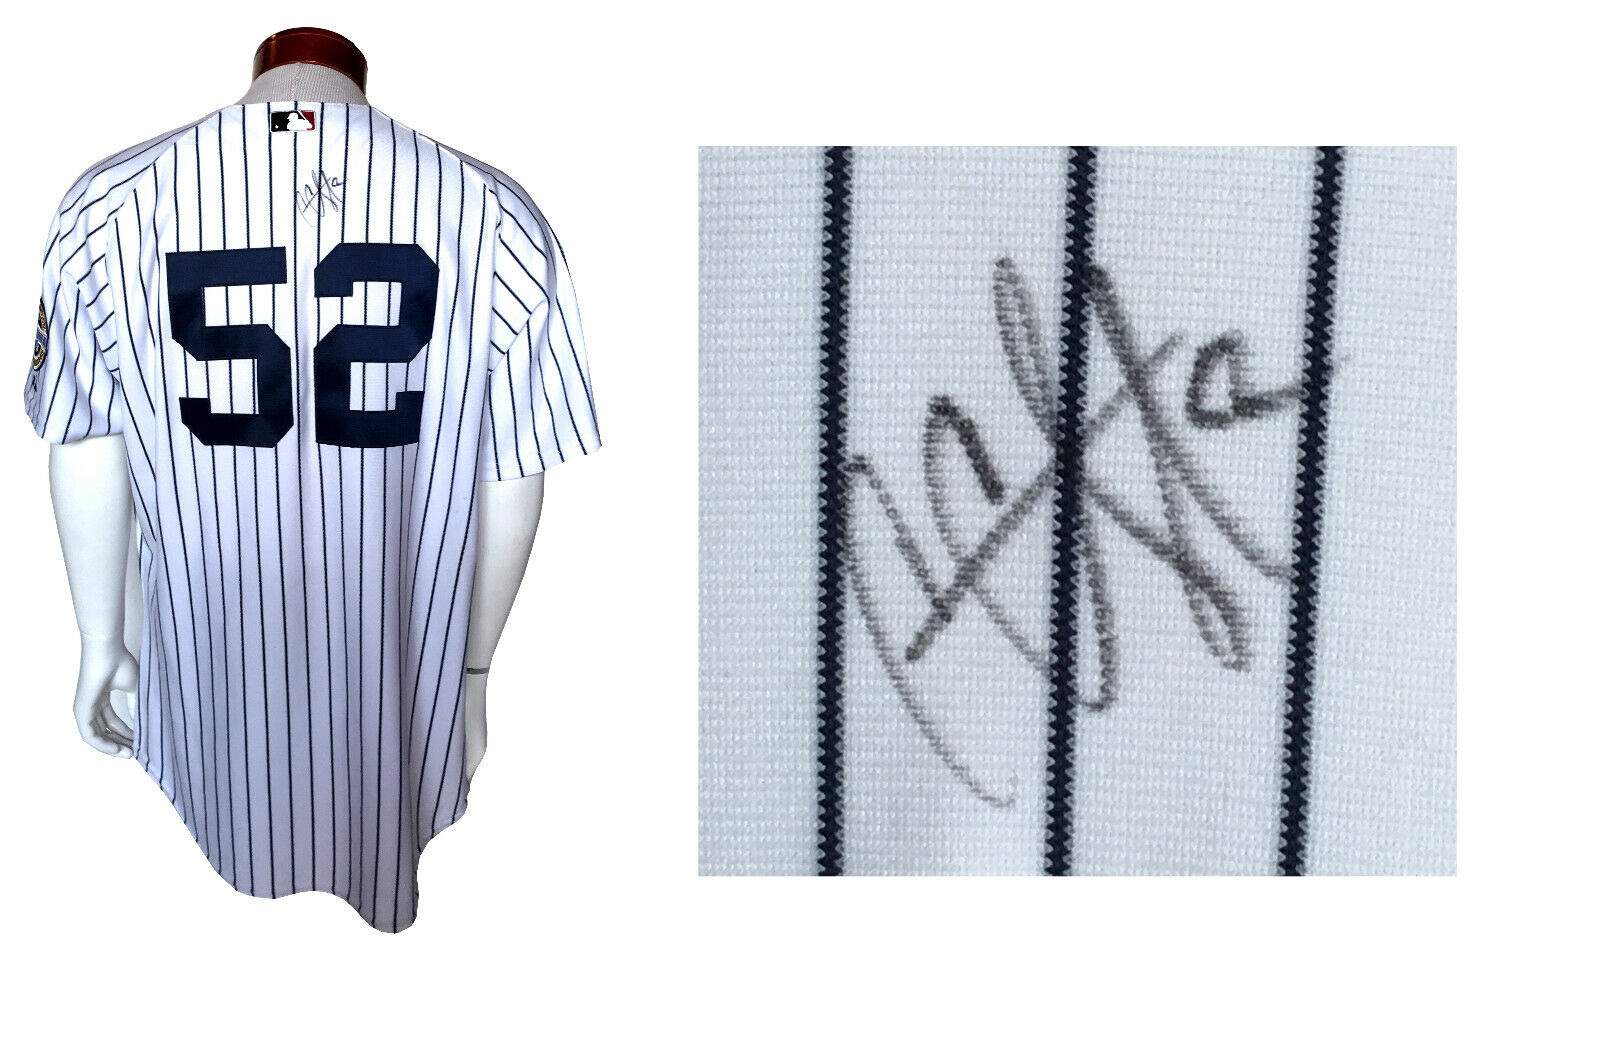 C.C. Sabathia Signed Authentic Majestic New York Yankees Jersey JSA Sticker